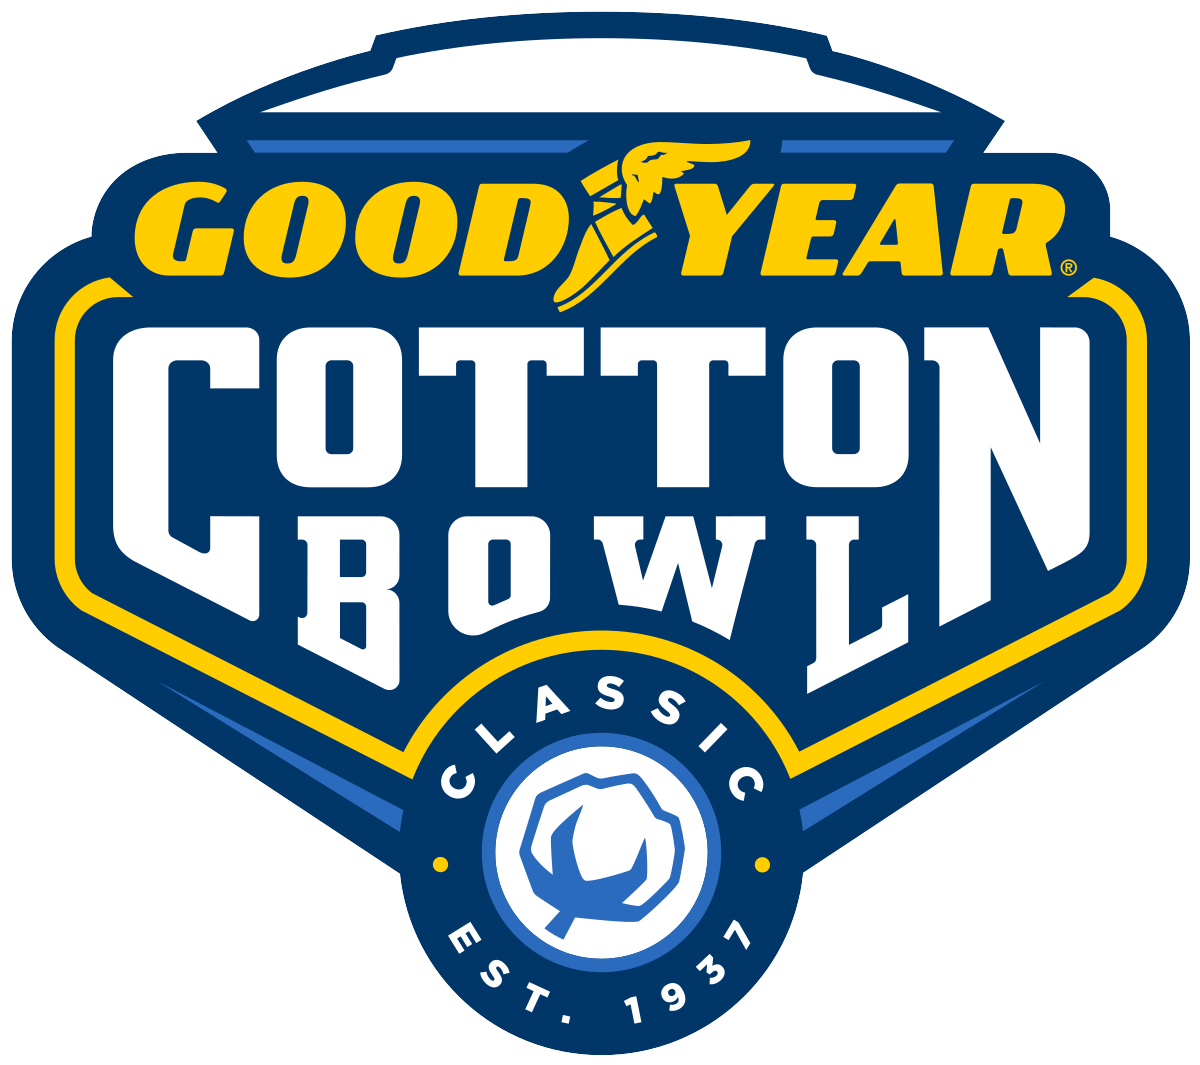 2023 Cotton Bowl Preview